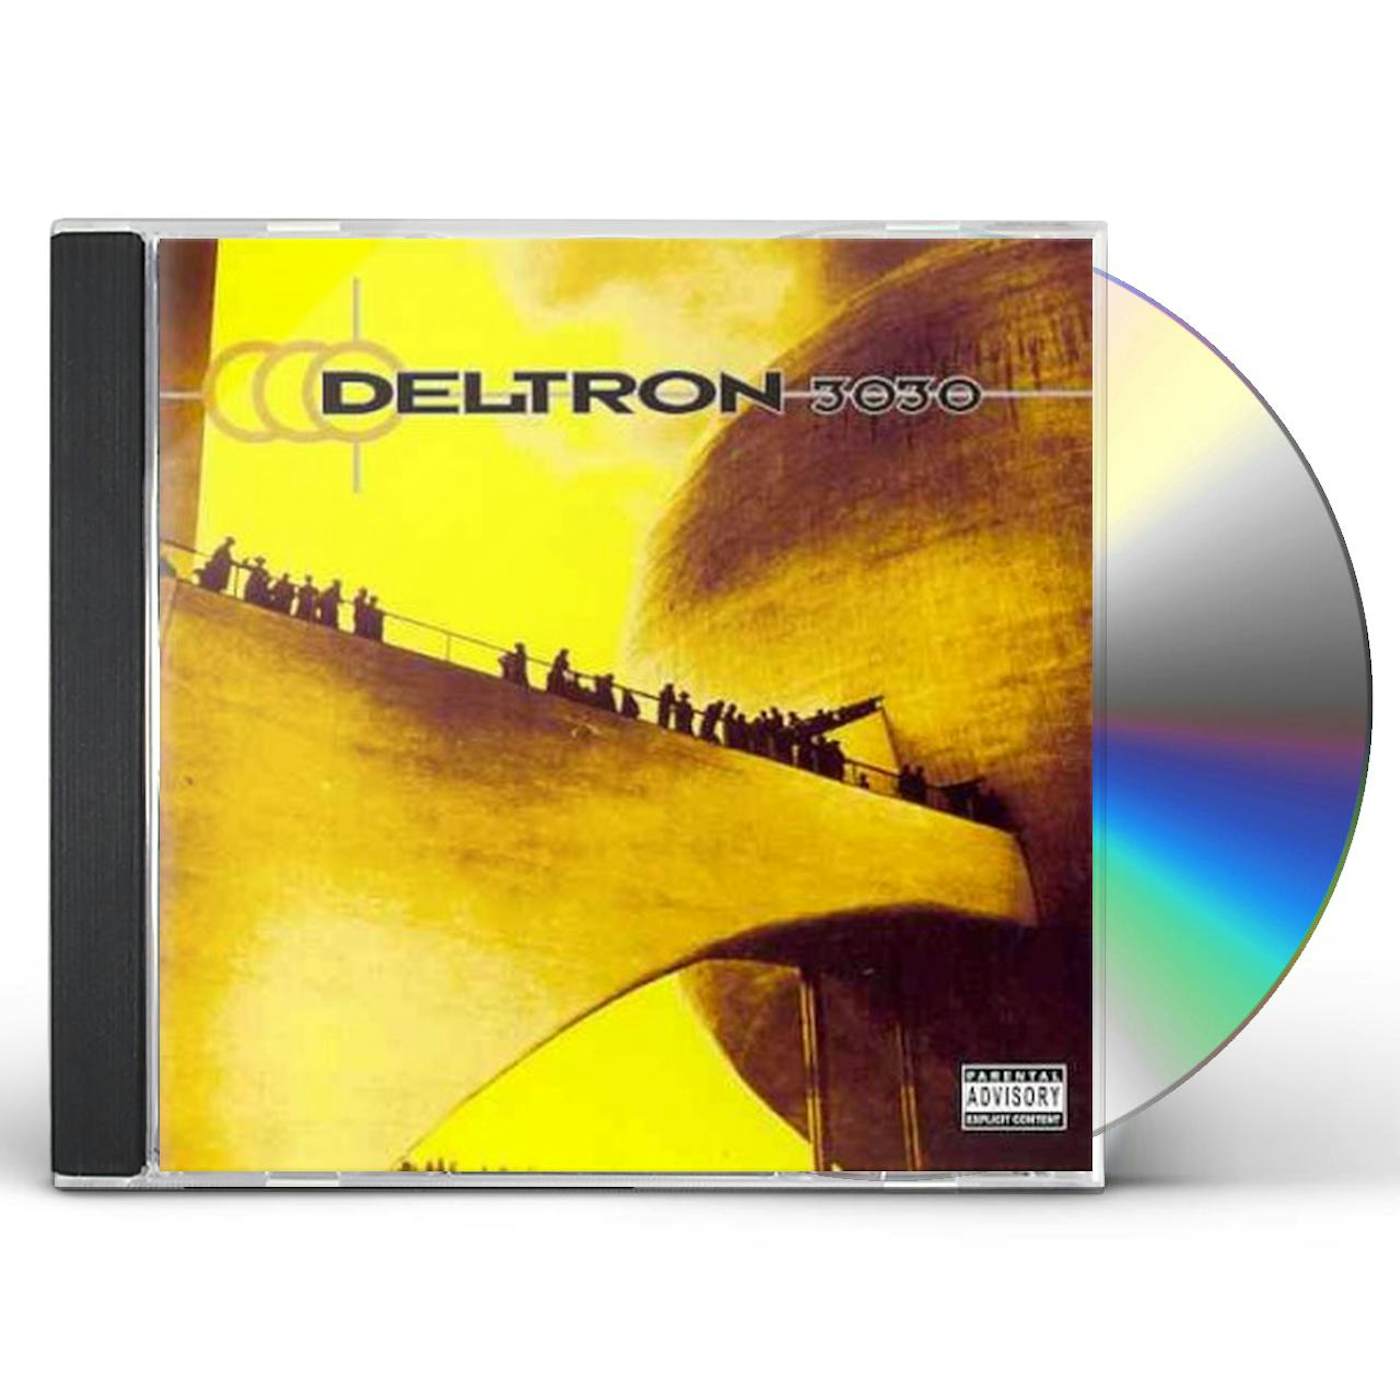 DELTRON 3030 CD